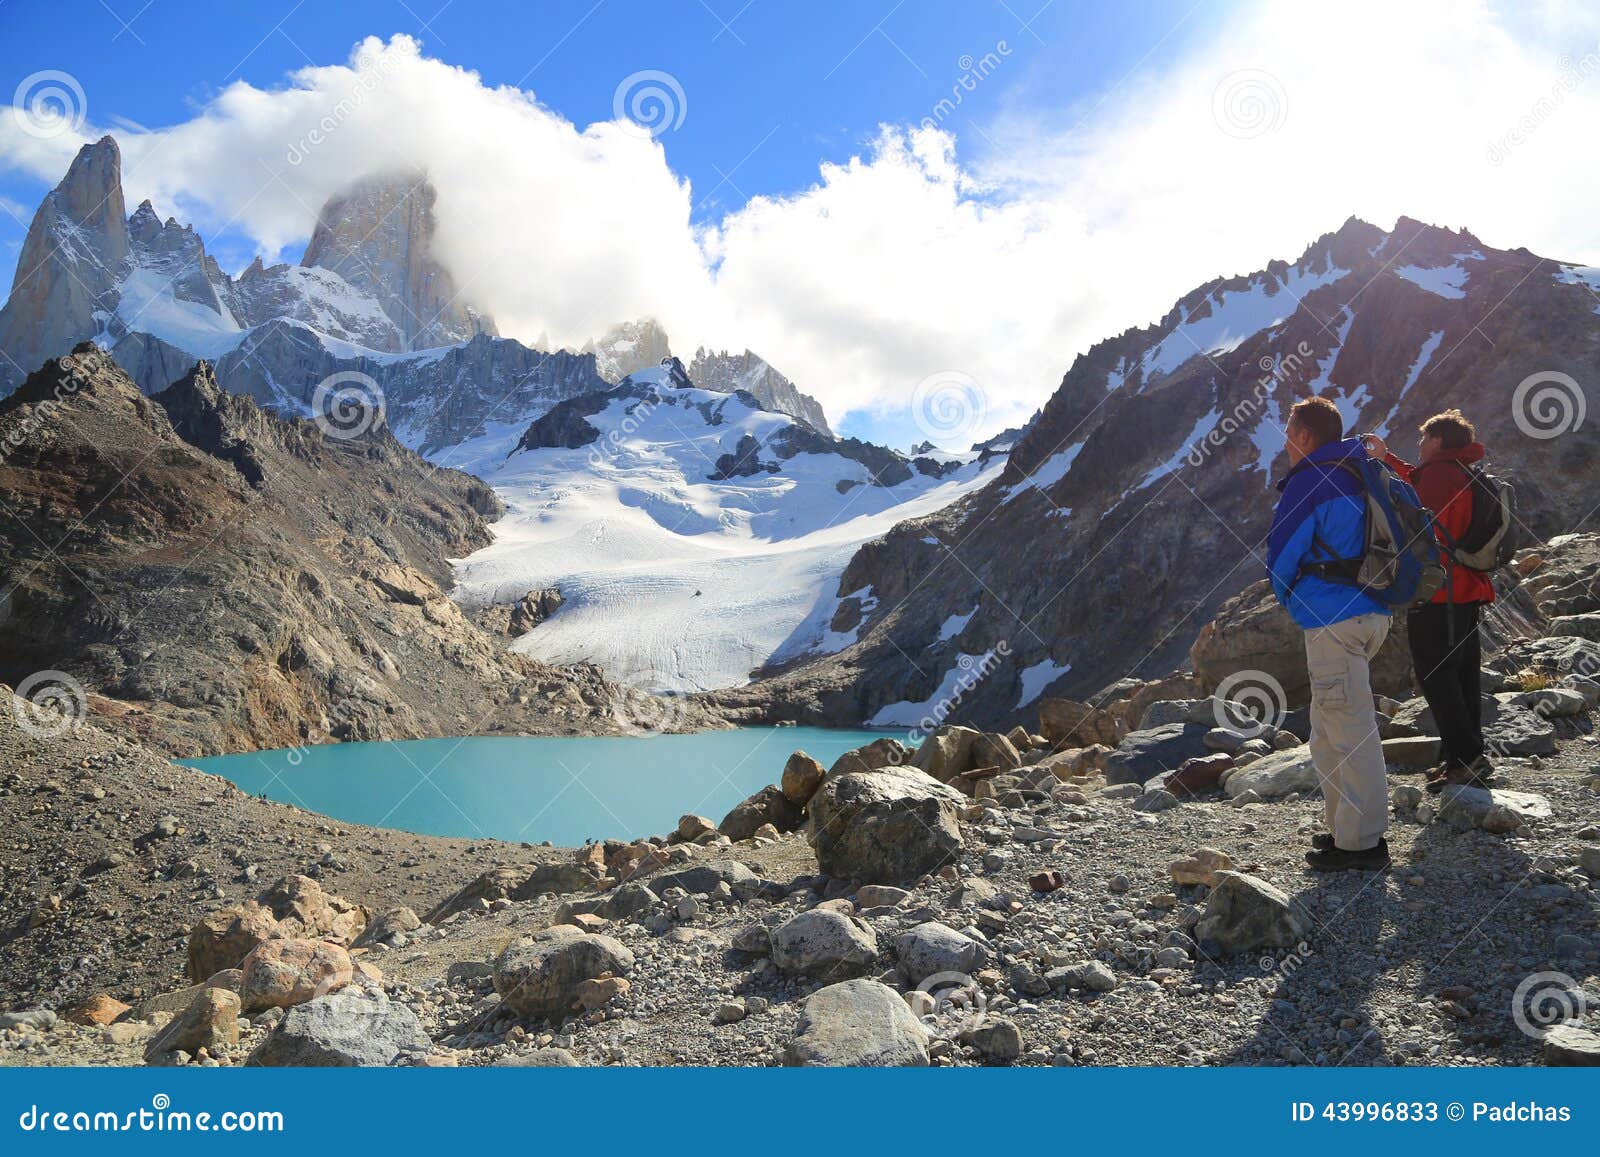 Tourist Trekking To See Mt Fitz Roy Summit in Argentina Editorial Stock ...